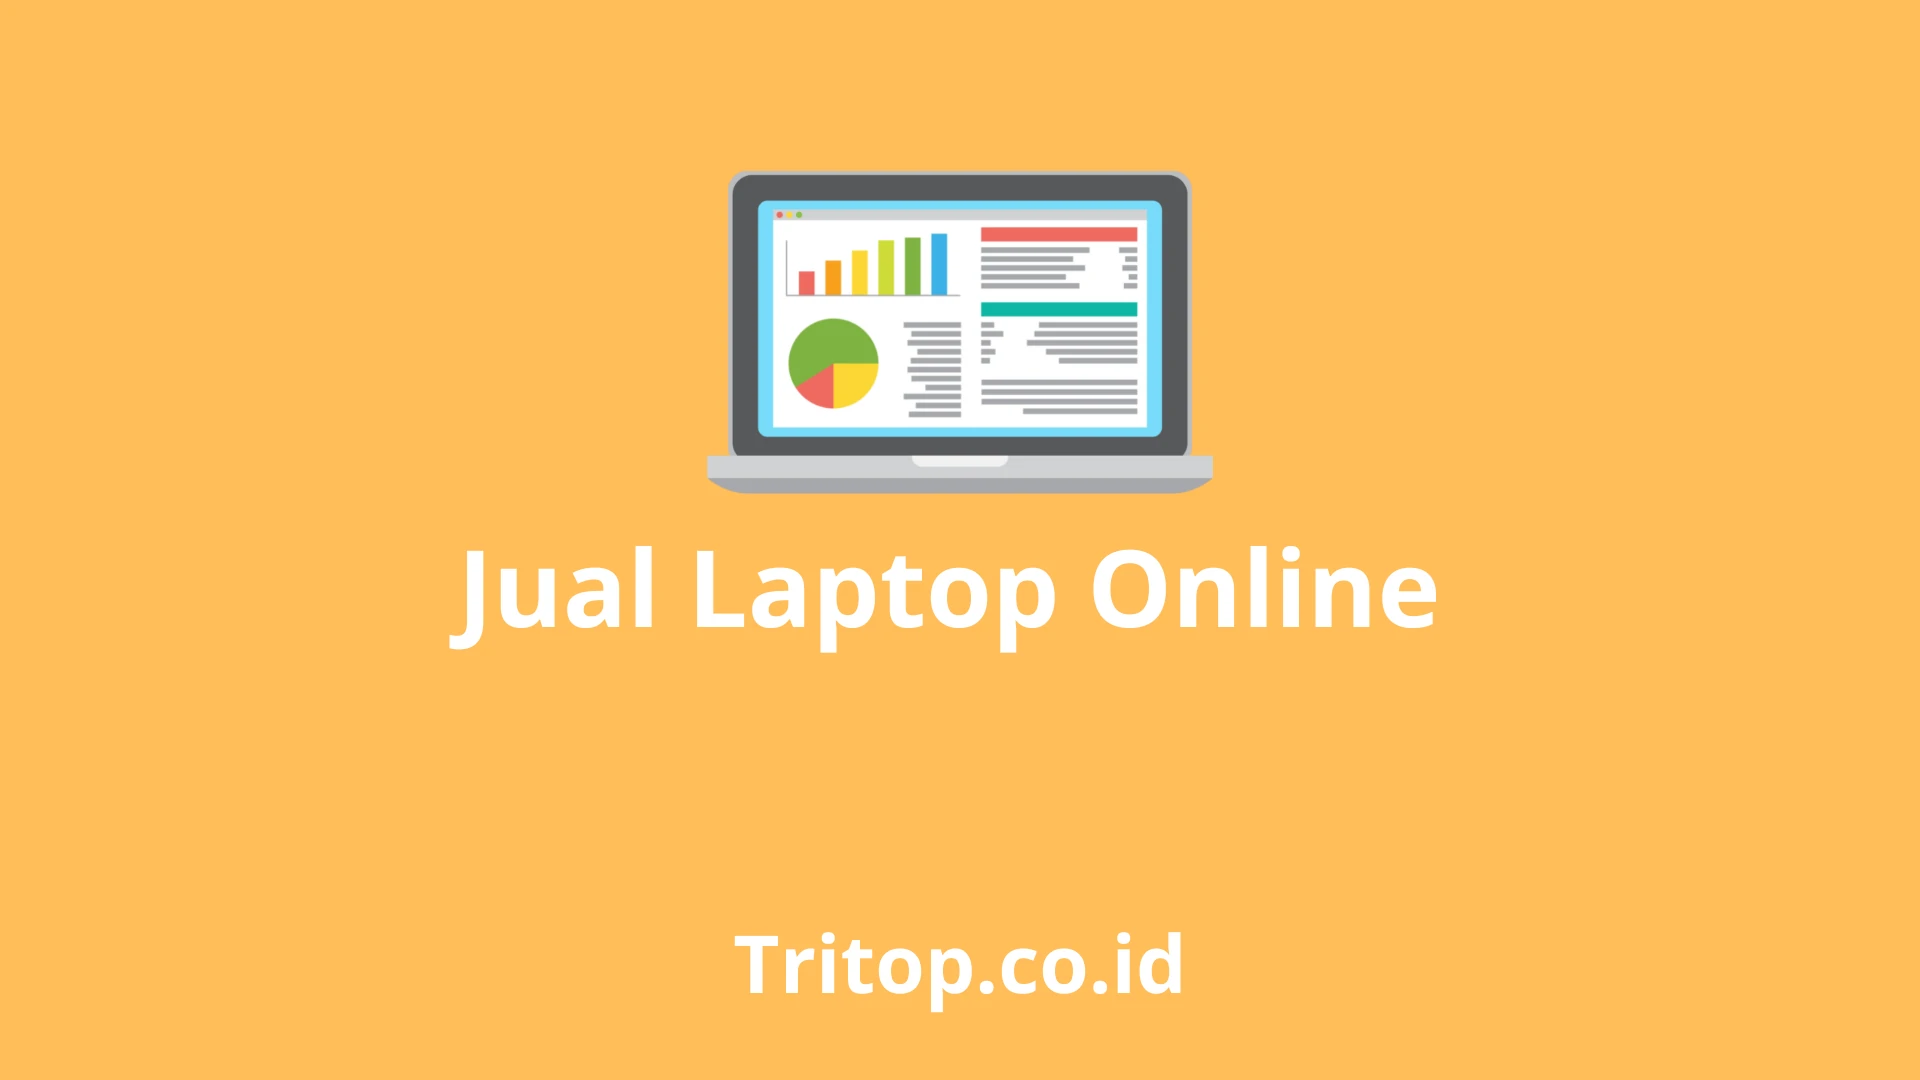 Jual Laptop Online tritop.co.id